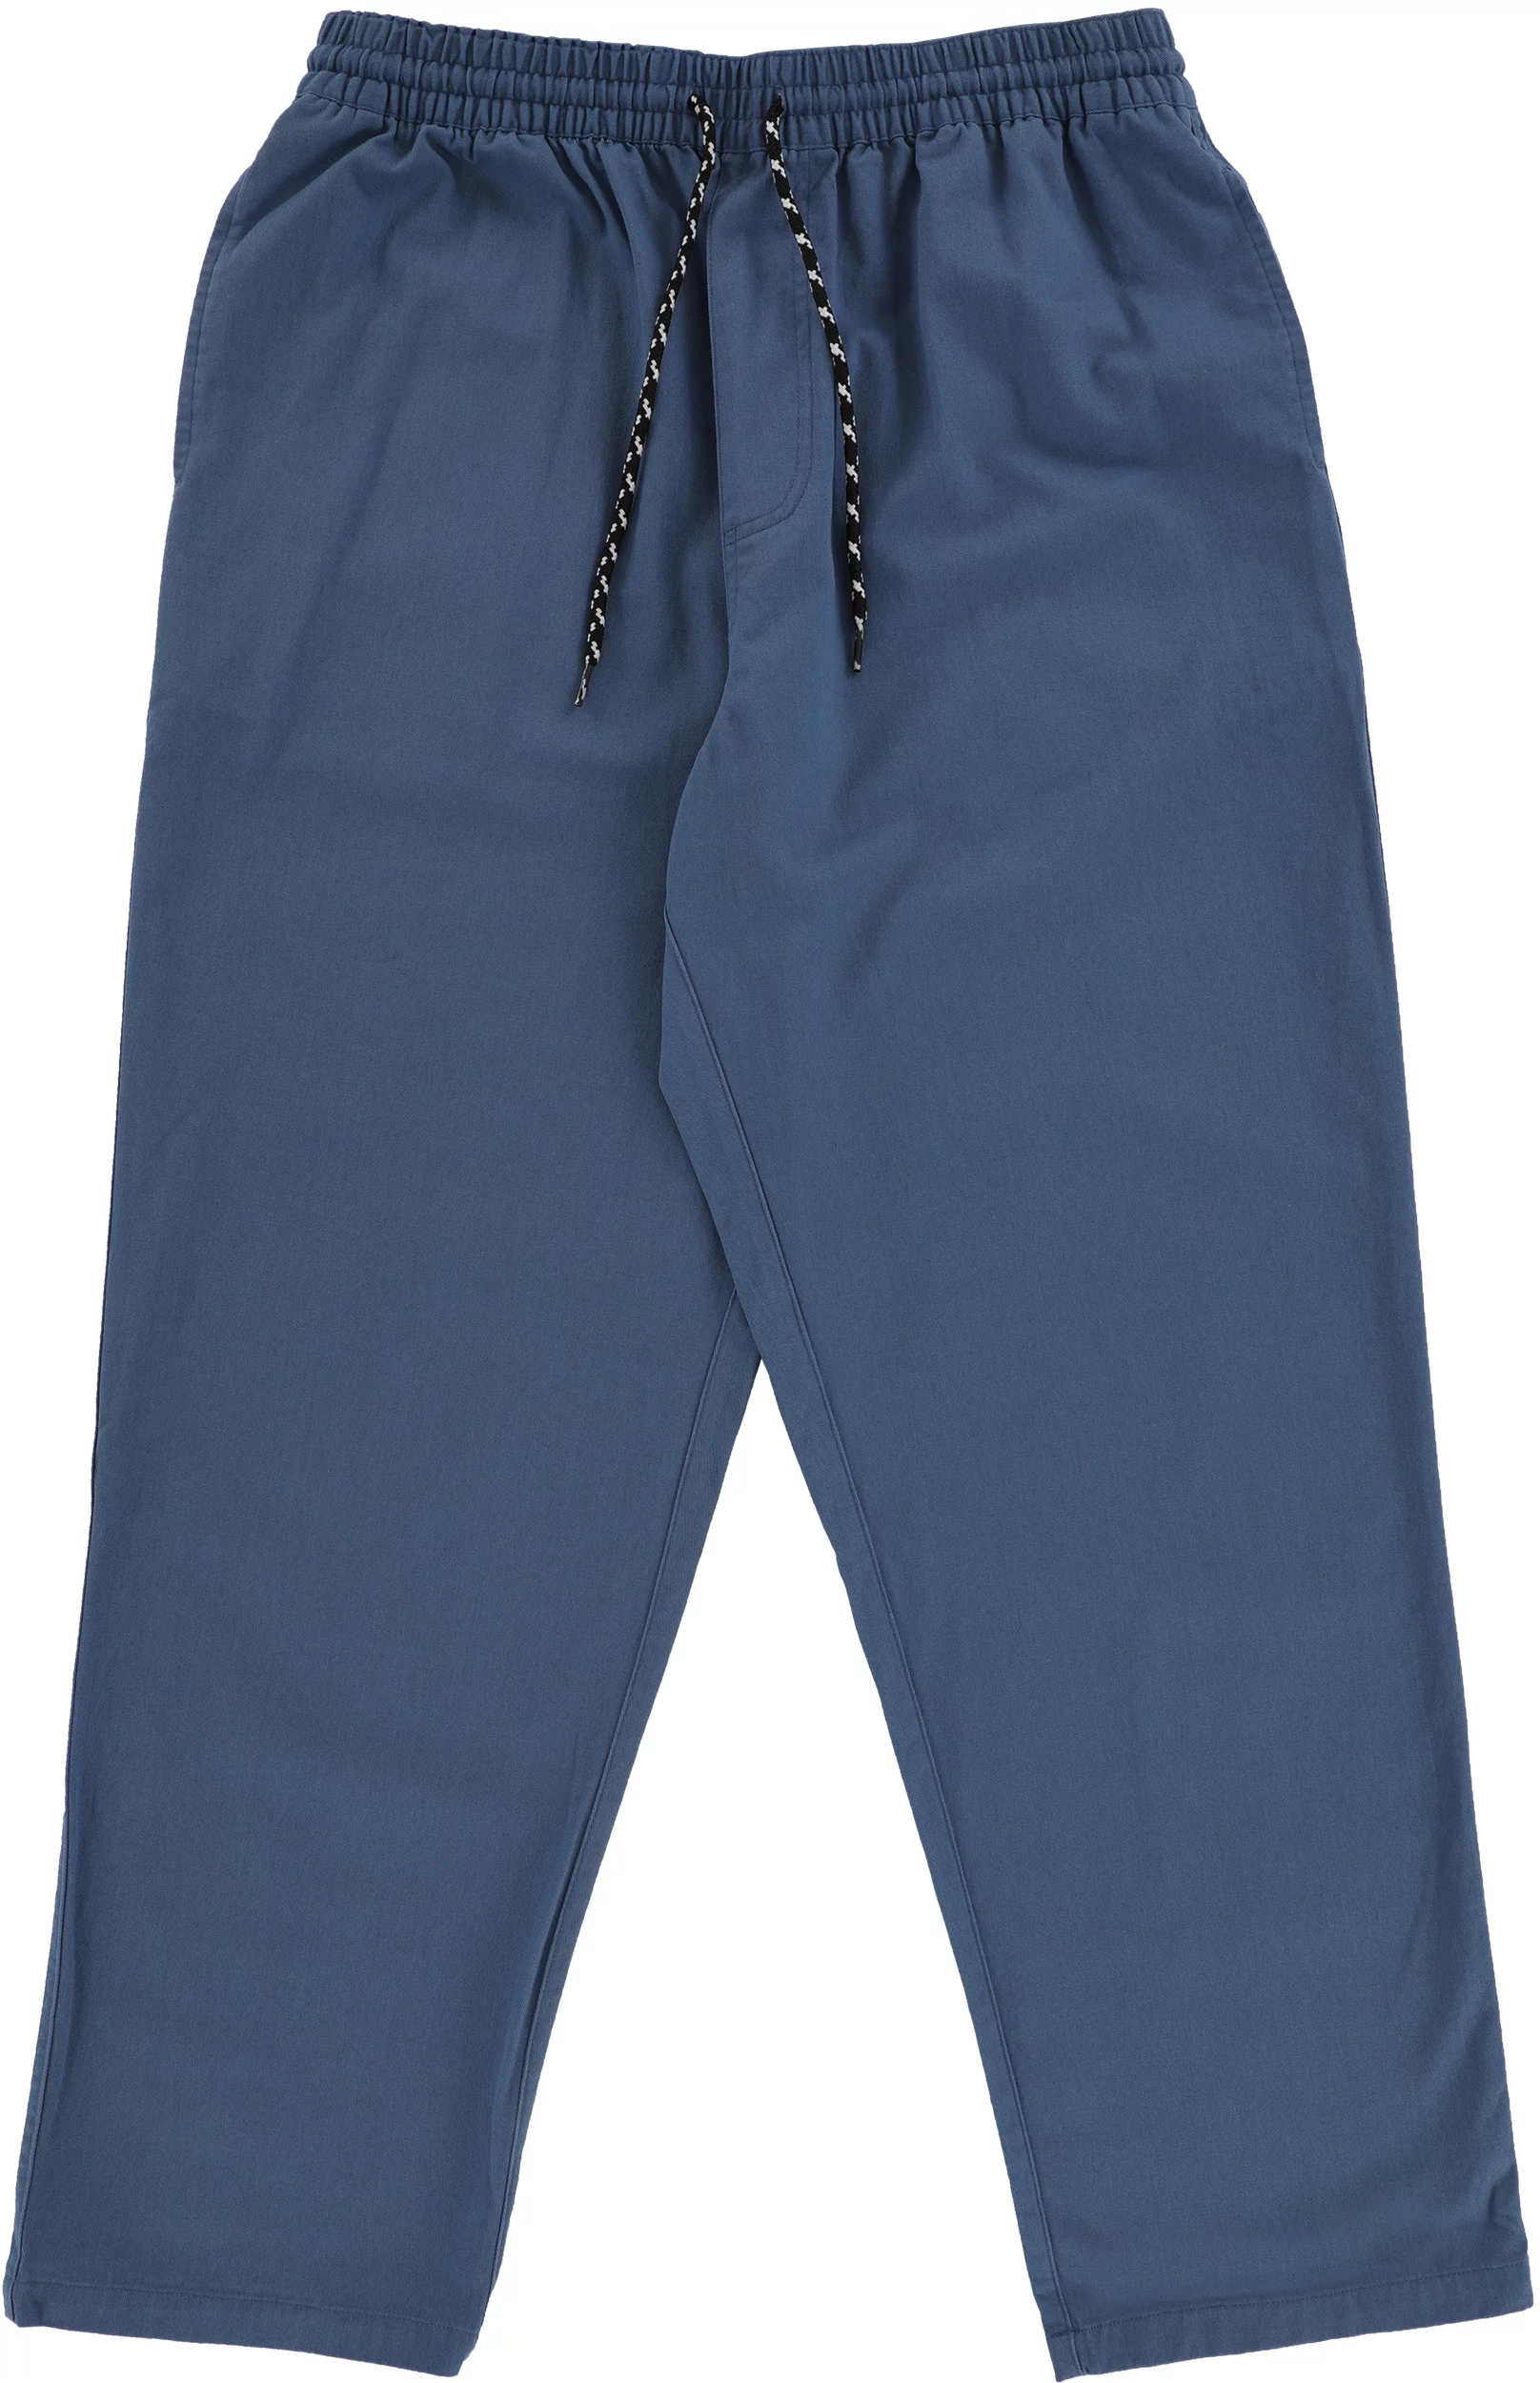 Perma Color Pima Twill Khaki Pants in Cadet Blue (Flat Front Models) b